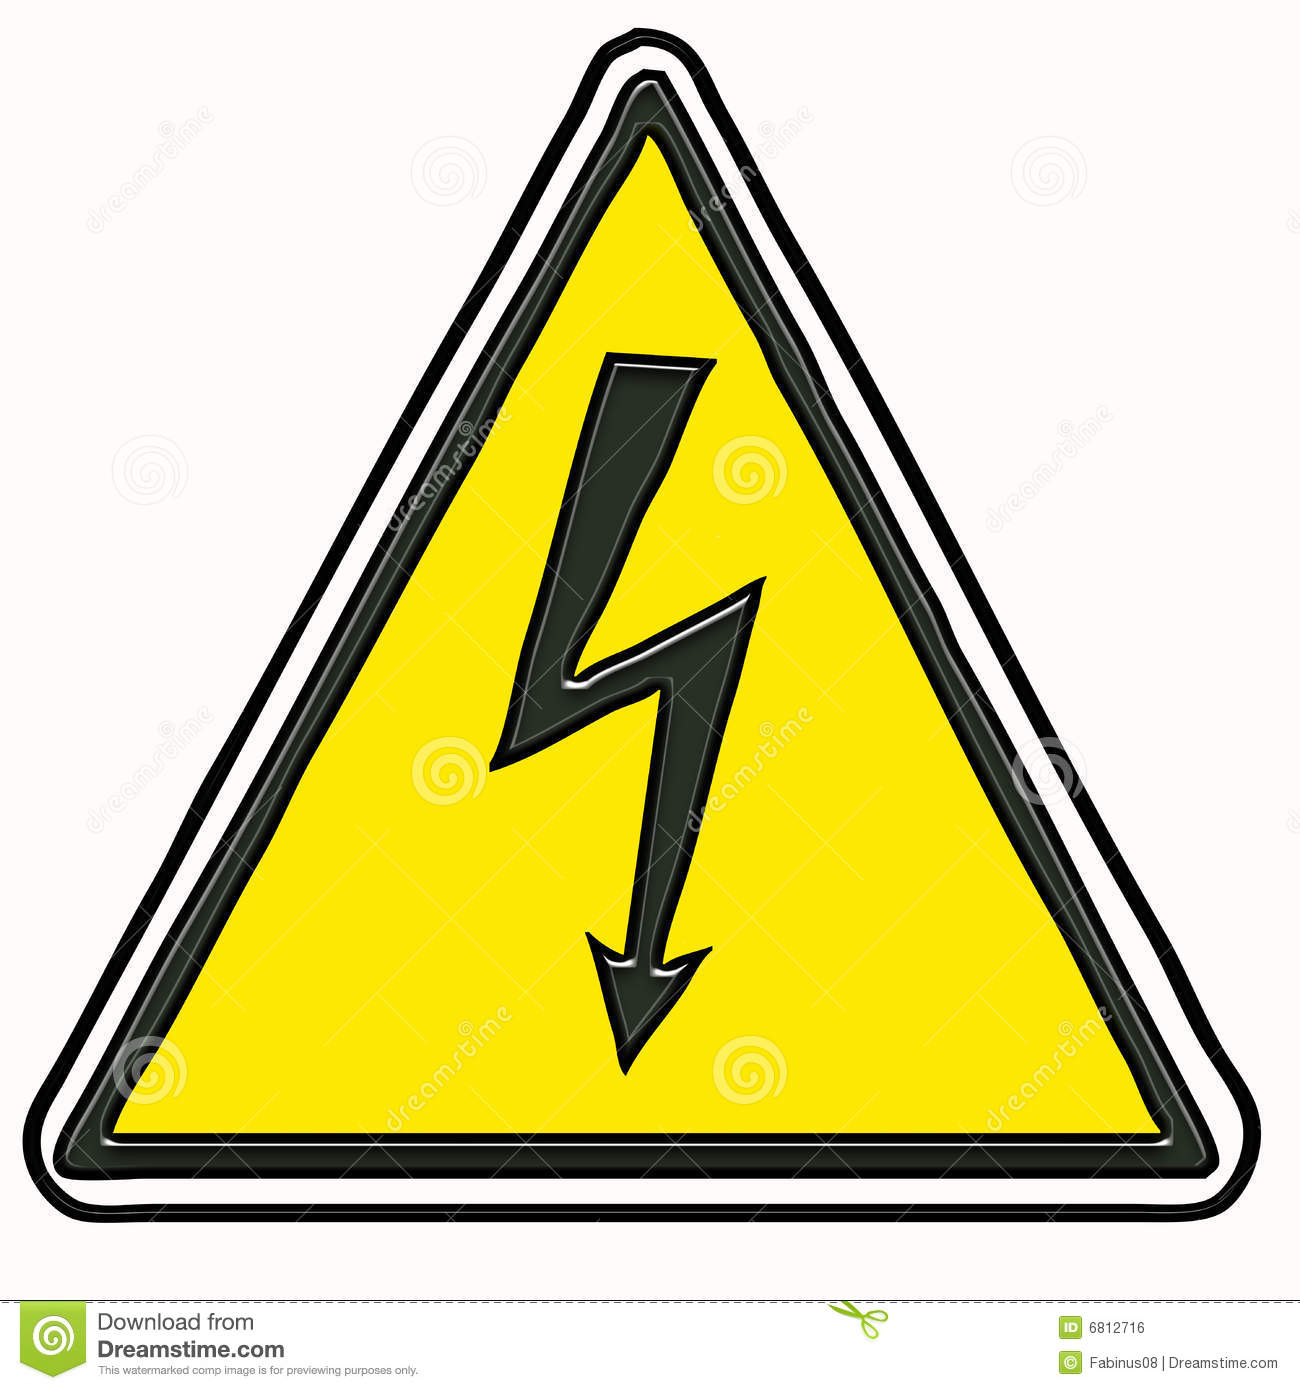 Warning Electric Sign Royalty Free Stock Image   Image  6812716